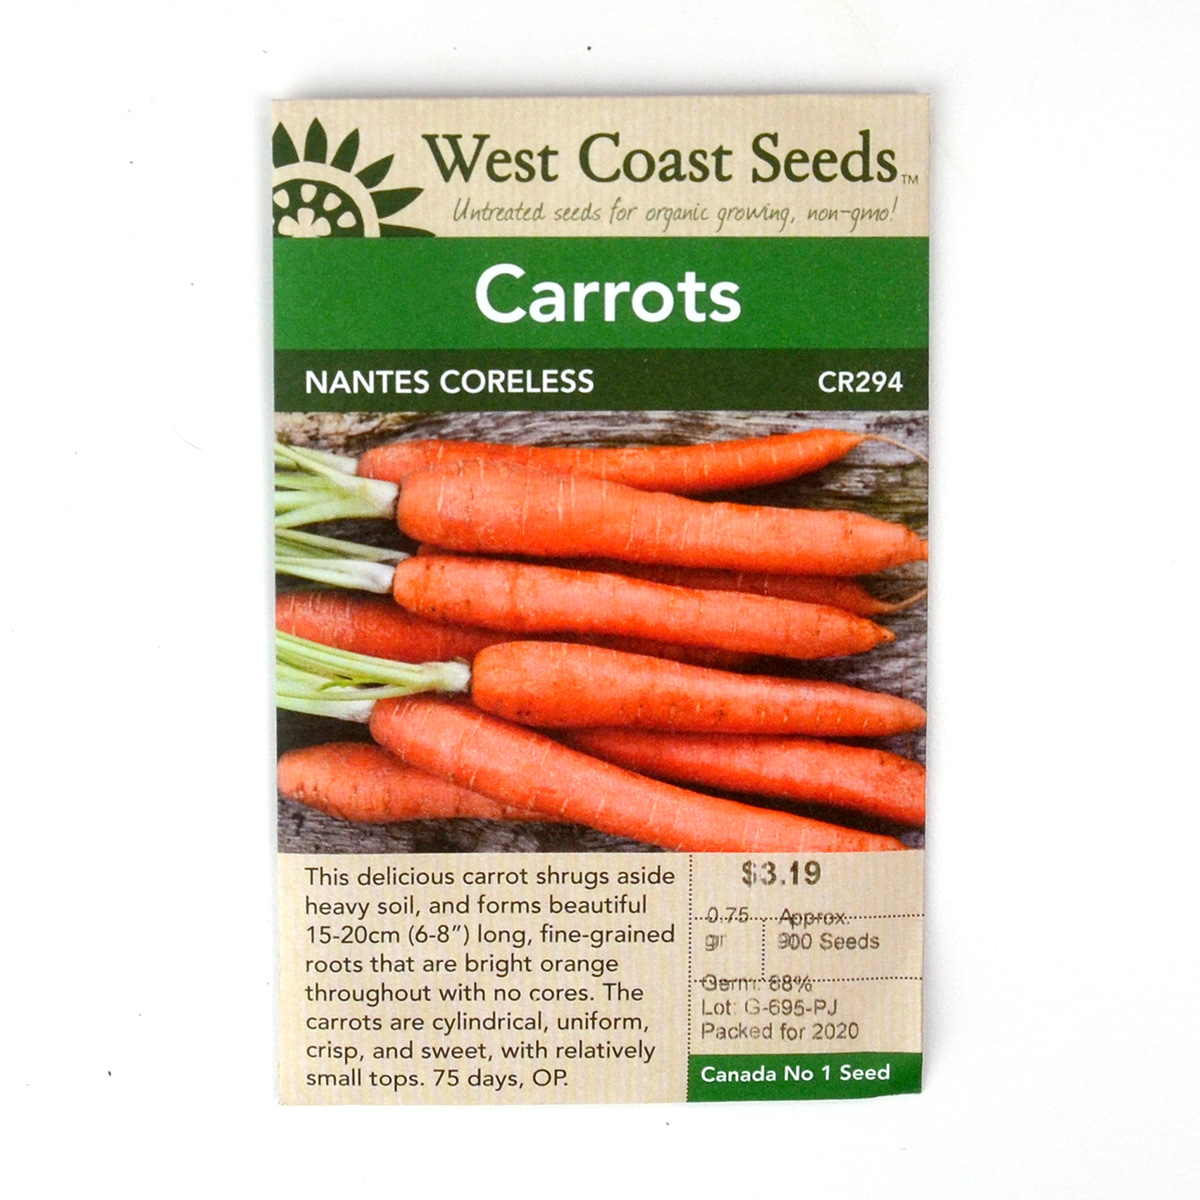 WCS_Carrots_NantesCoreless.jpg